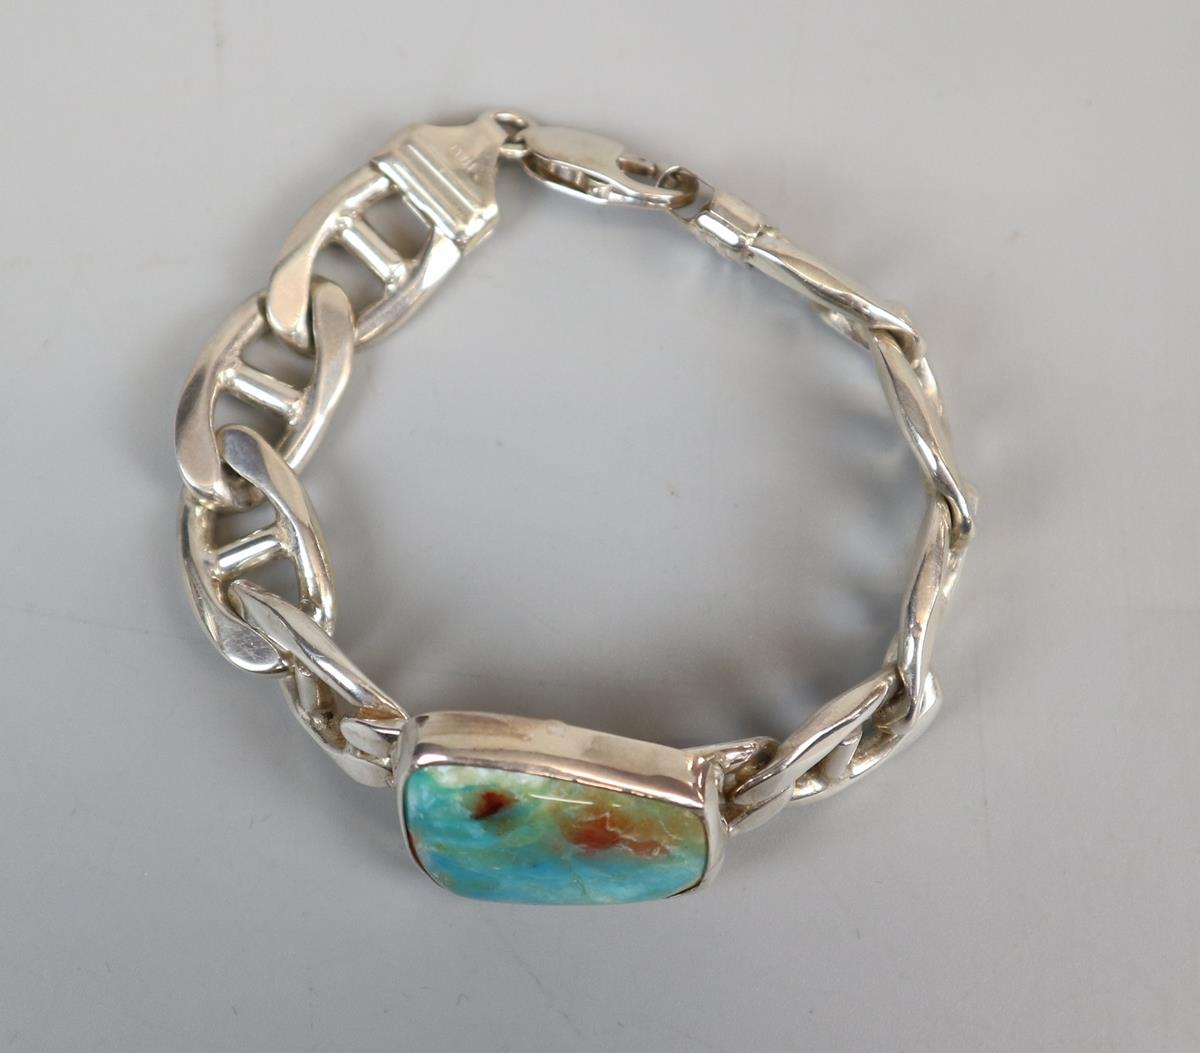 Heavy silver bracelet with Australian opal inset - Image 3 of 3